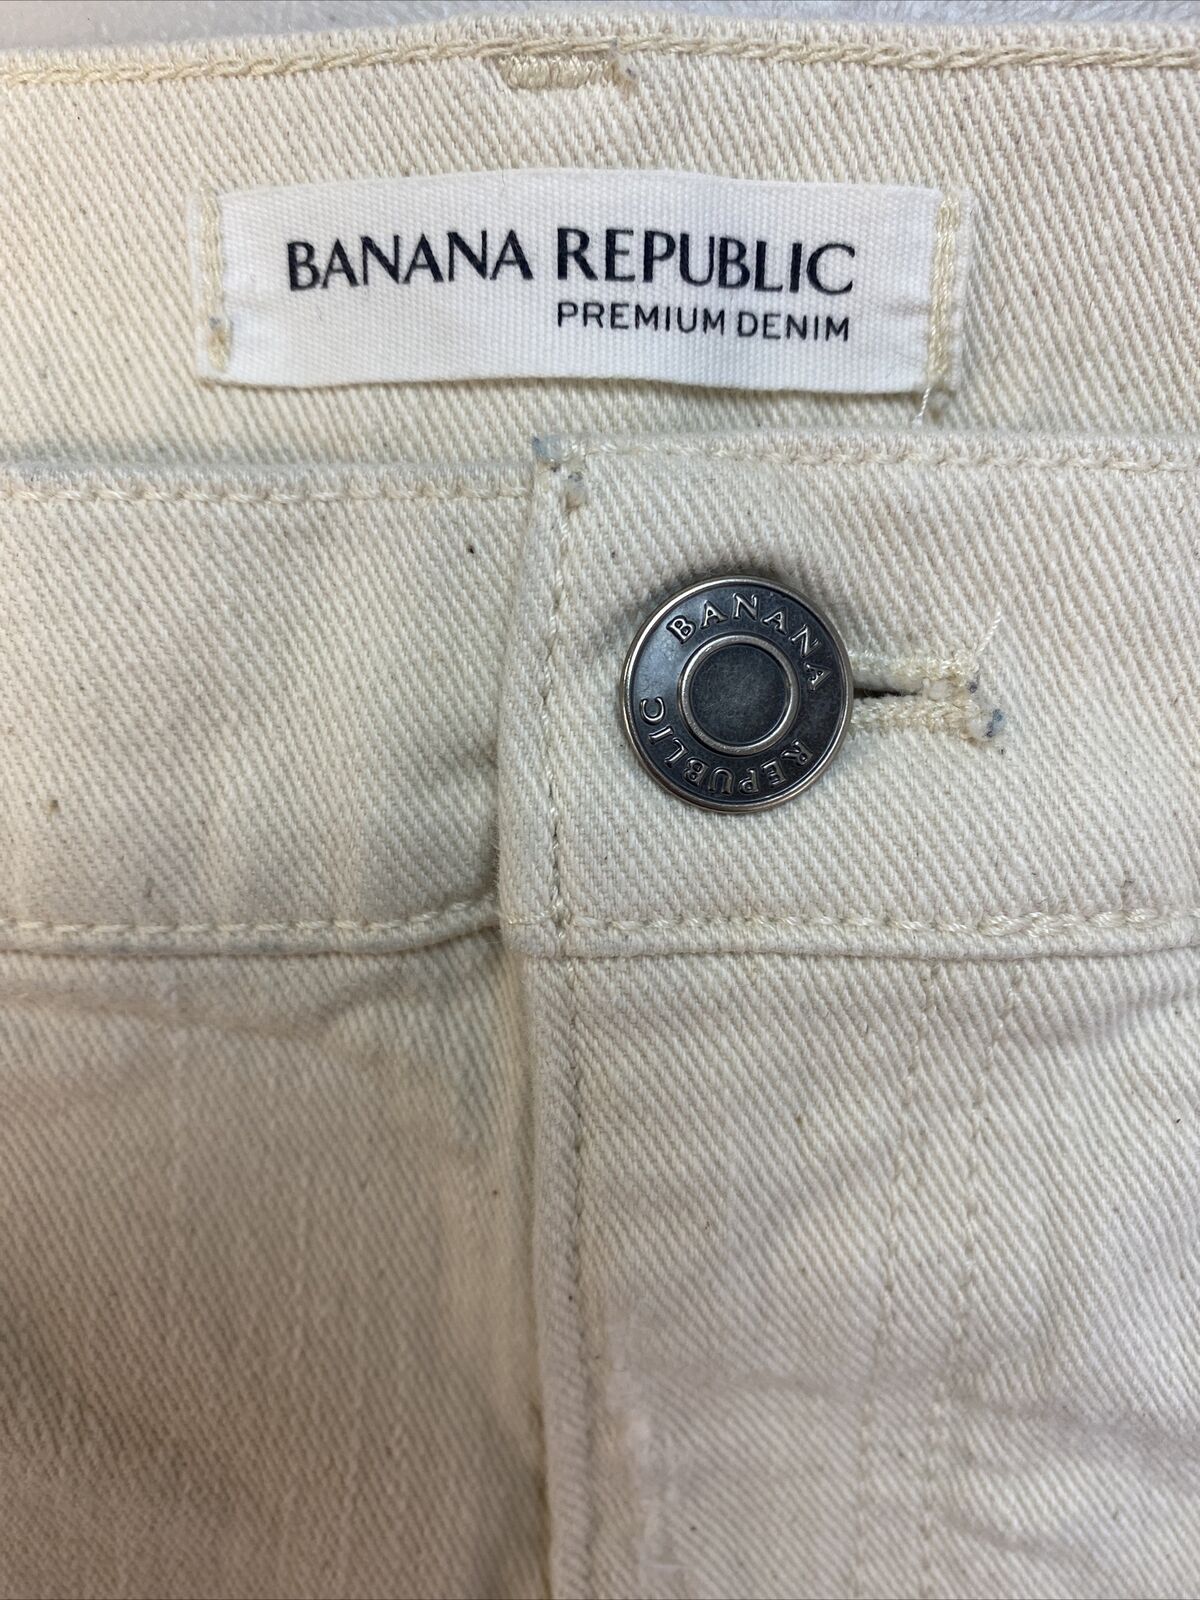 Banana Republic Mujer Beige Premium Denim Jean Shorts Sz 30 L